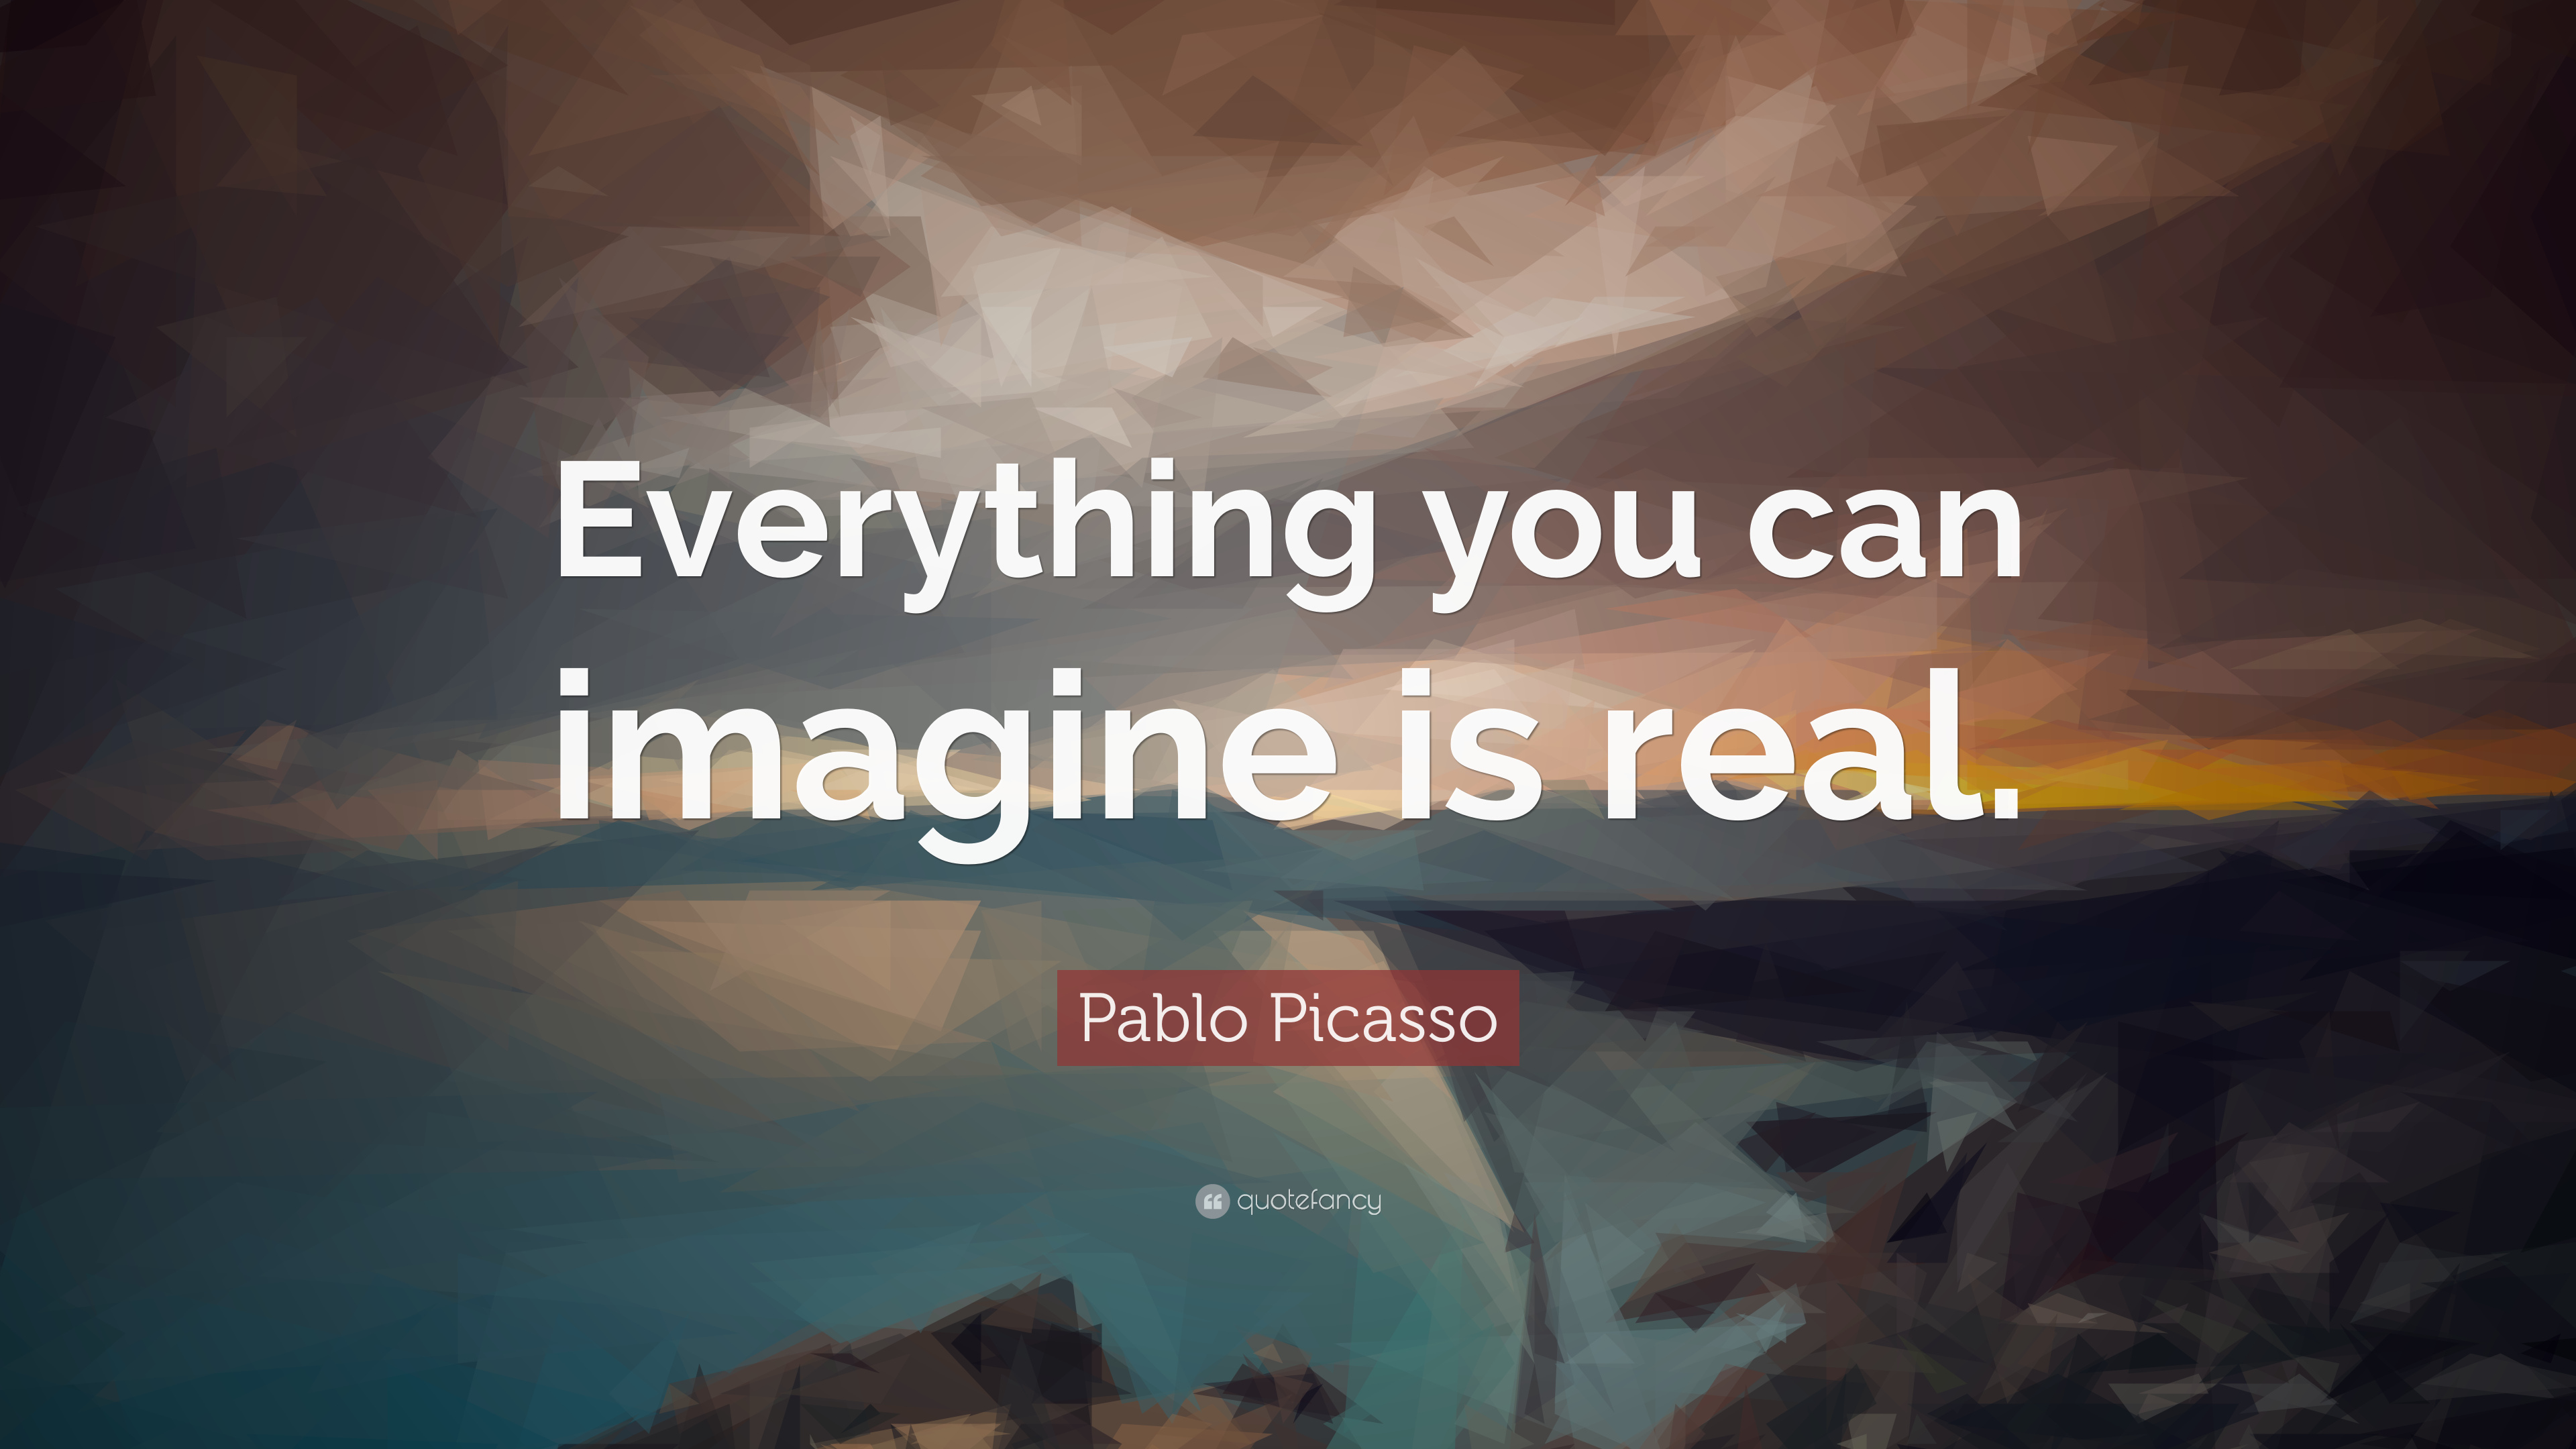 Pablo Picasso Quote - Imagine Quotes - 3840x2160 Wallpaper ...